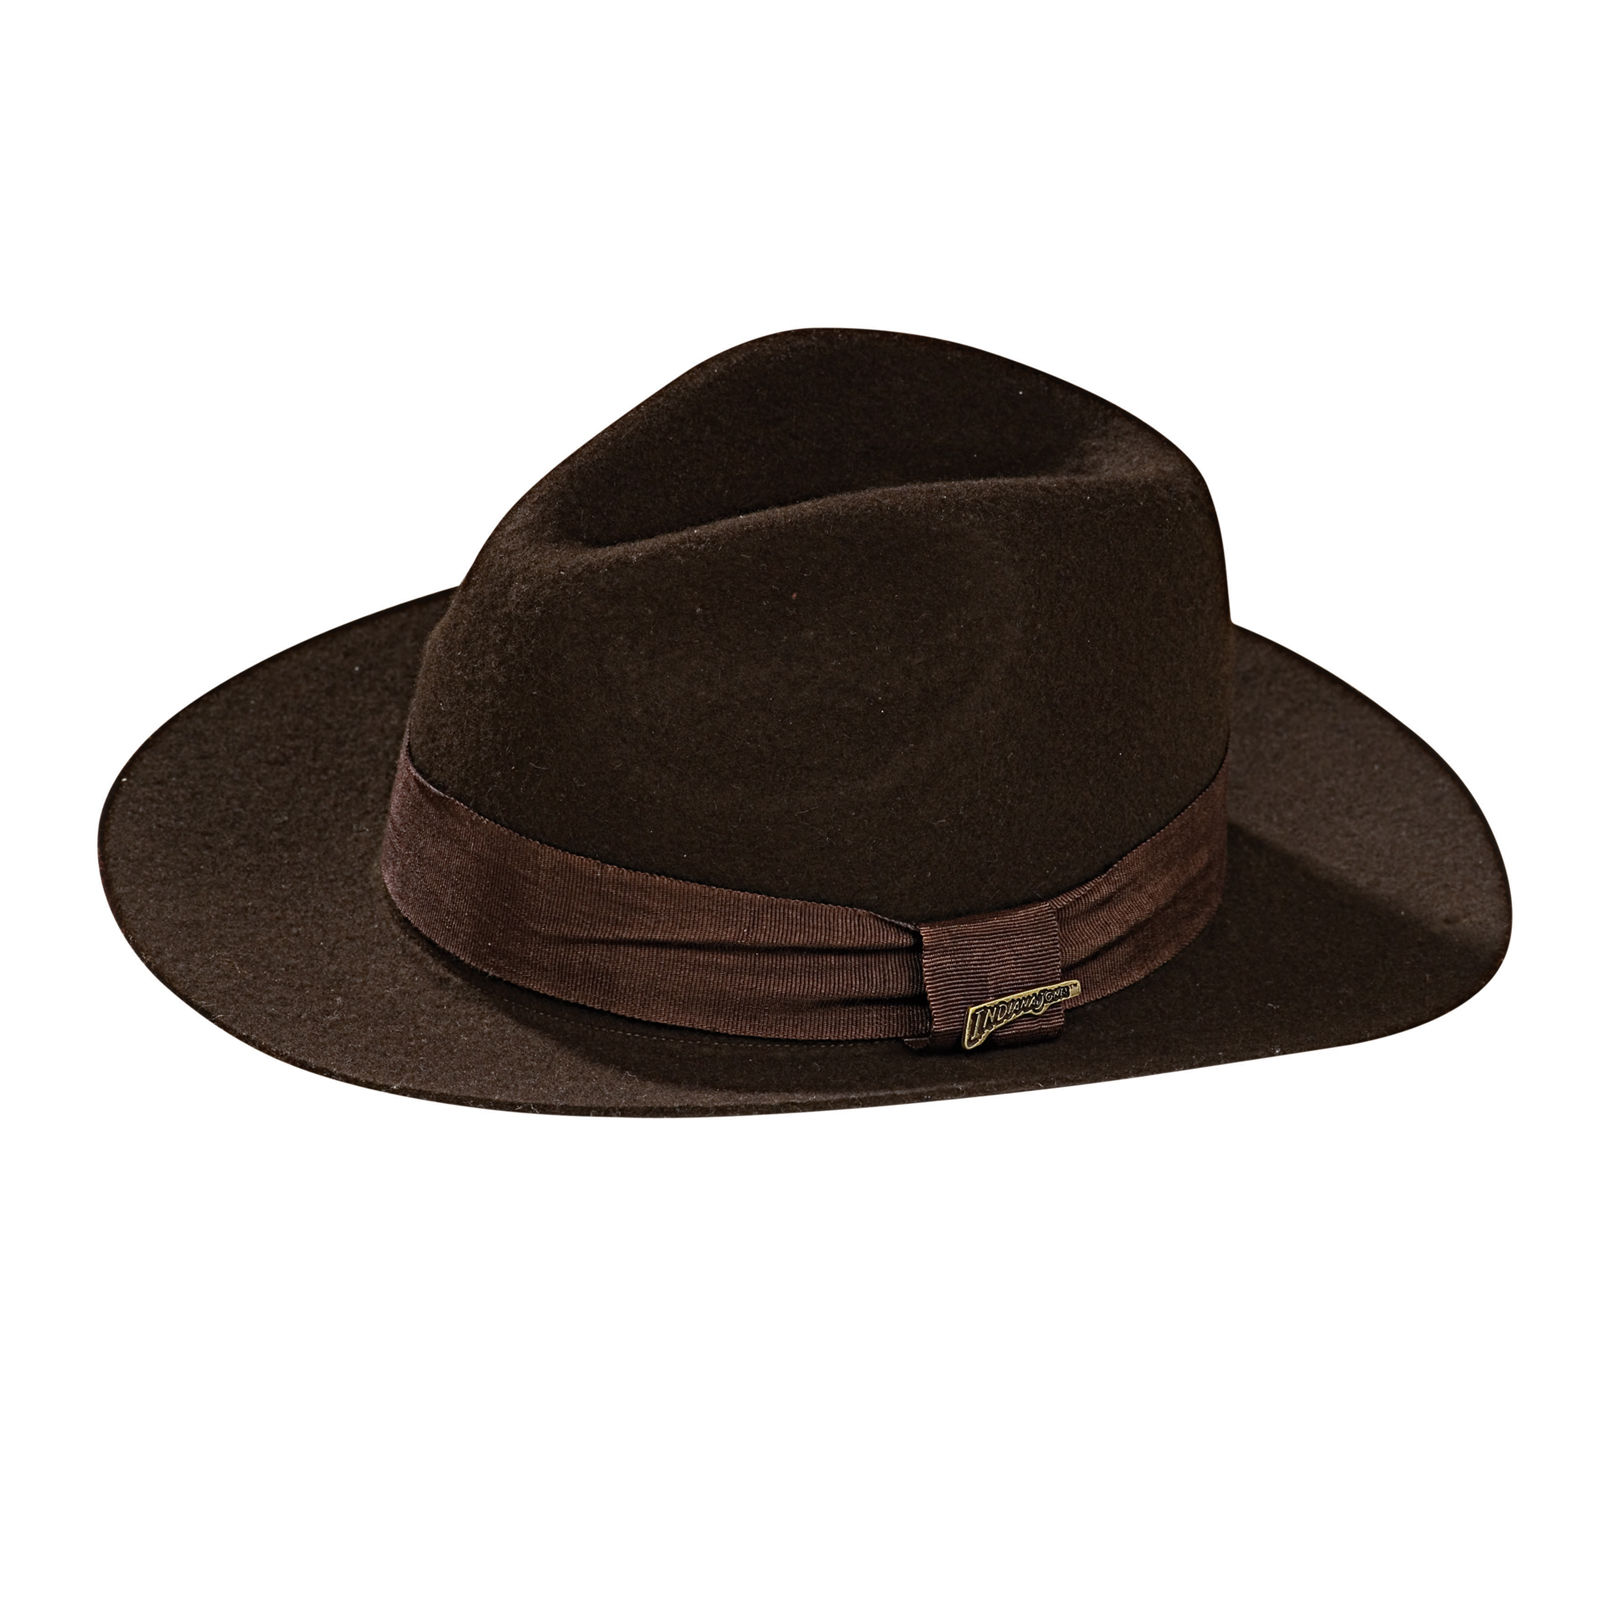 Indiana Jones Hat Name